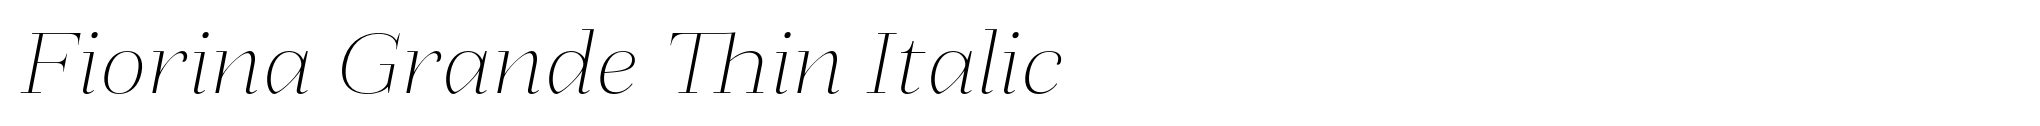 Fiorina Grande Thin Italic image